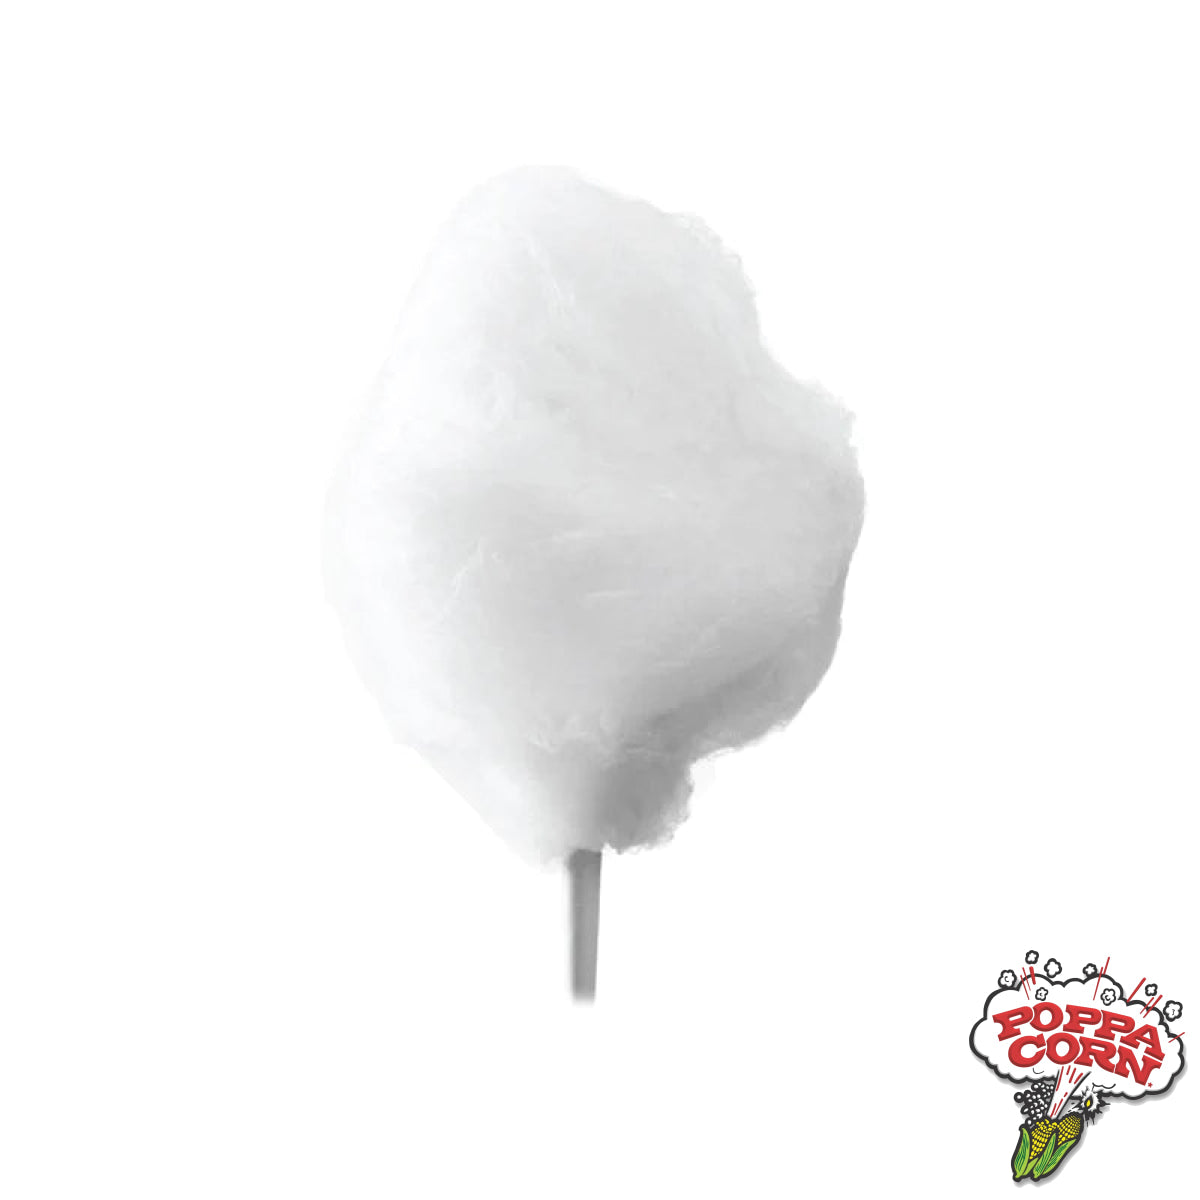 White Citrus (Passion Fruit) Cotton Candy Flossugar - 3.25lb Carton - FLO035 - Poppa Corn Corp